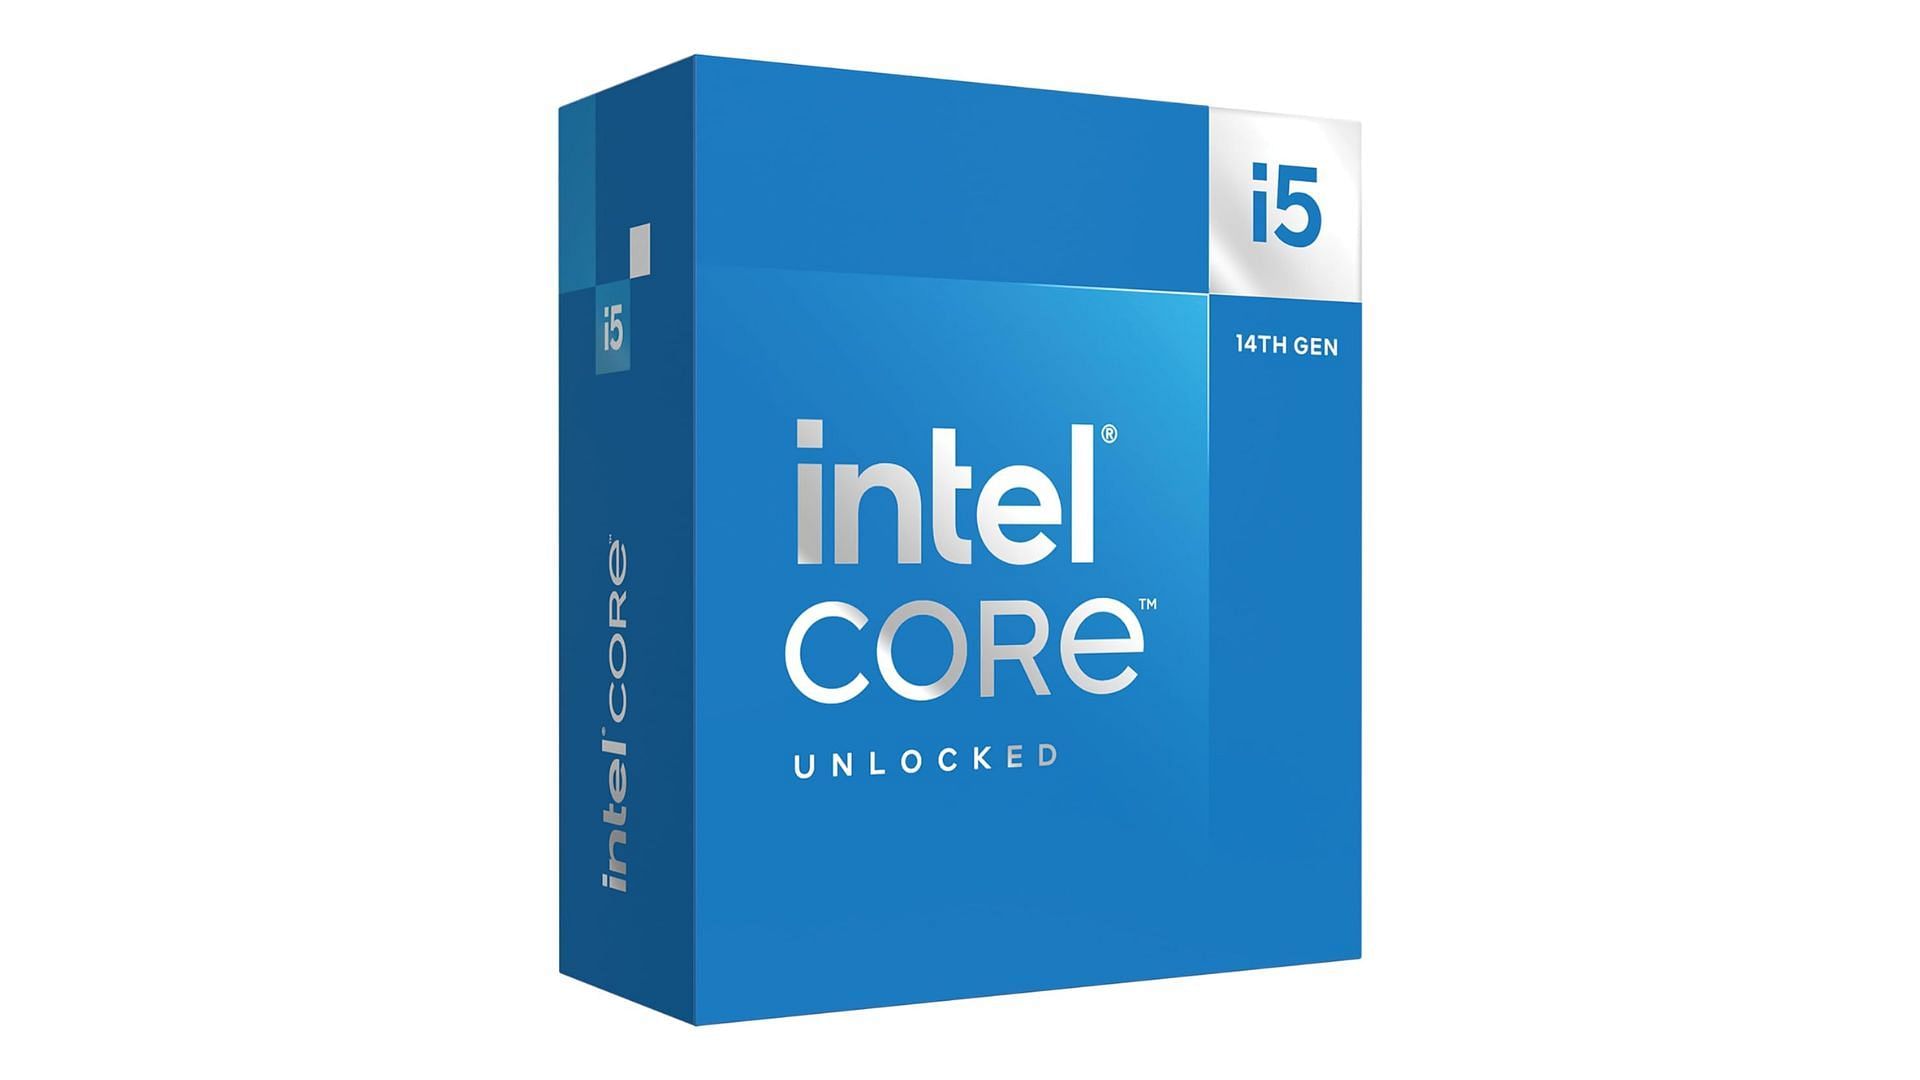 Packaging of the Intel Core i5-14600K (Image via Intel)